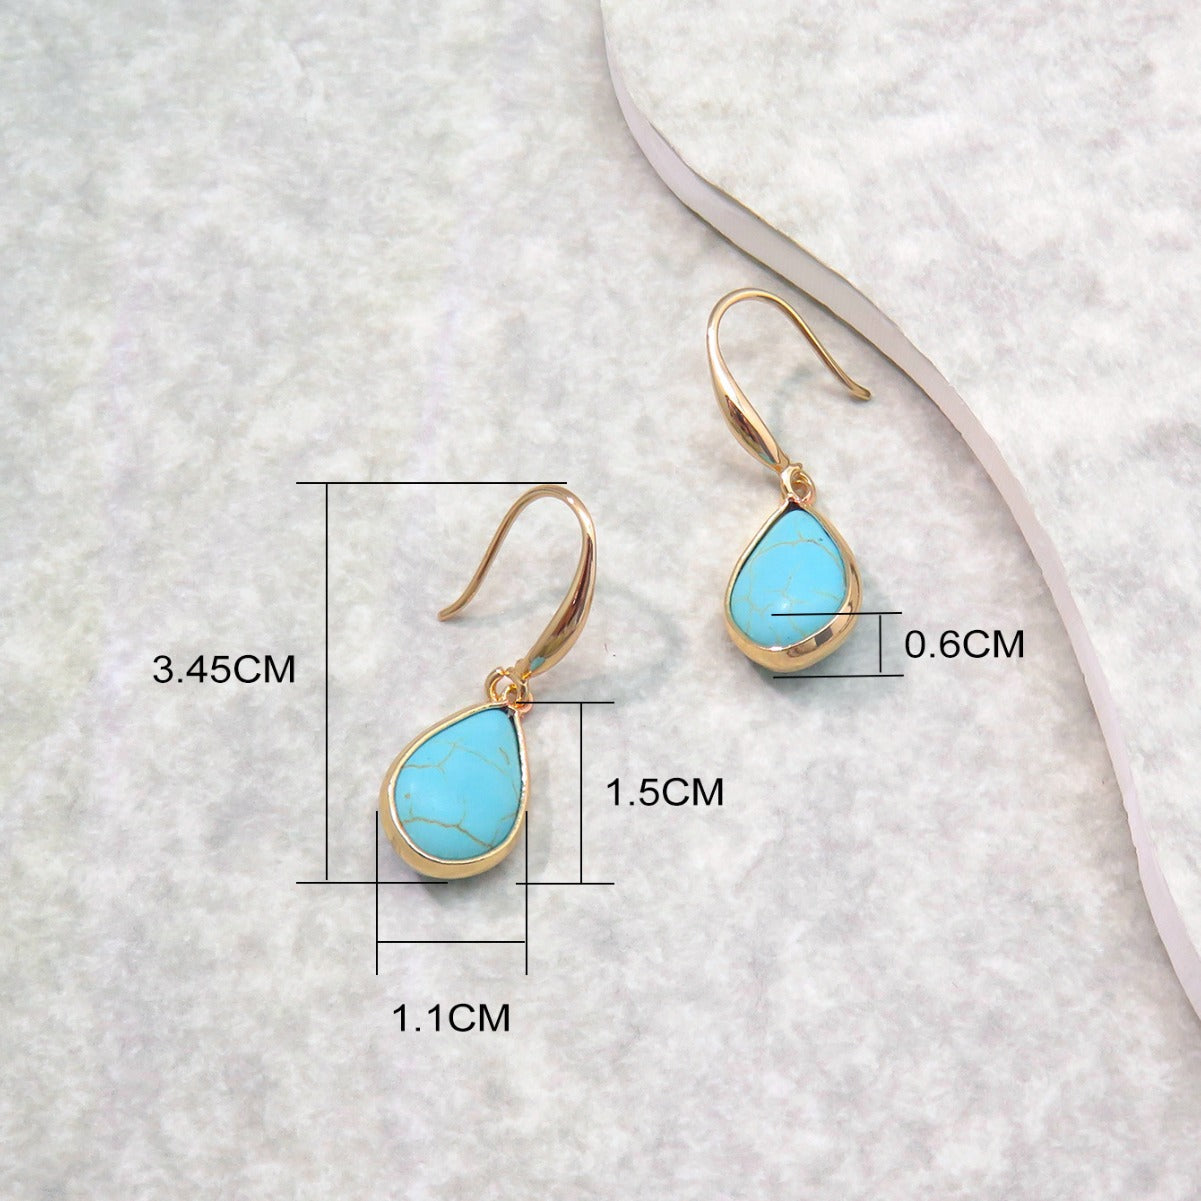 Drop-shaped turquoise earrings